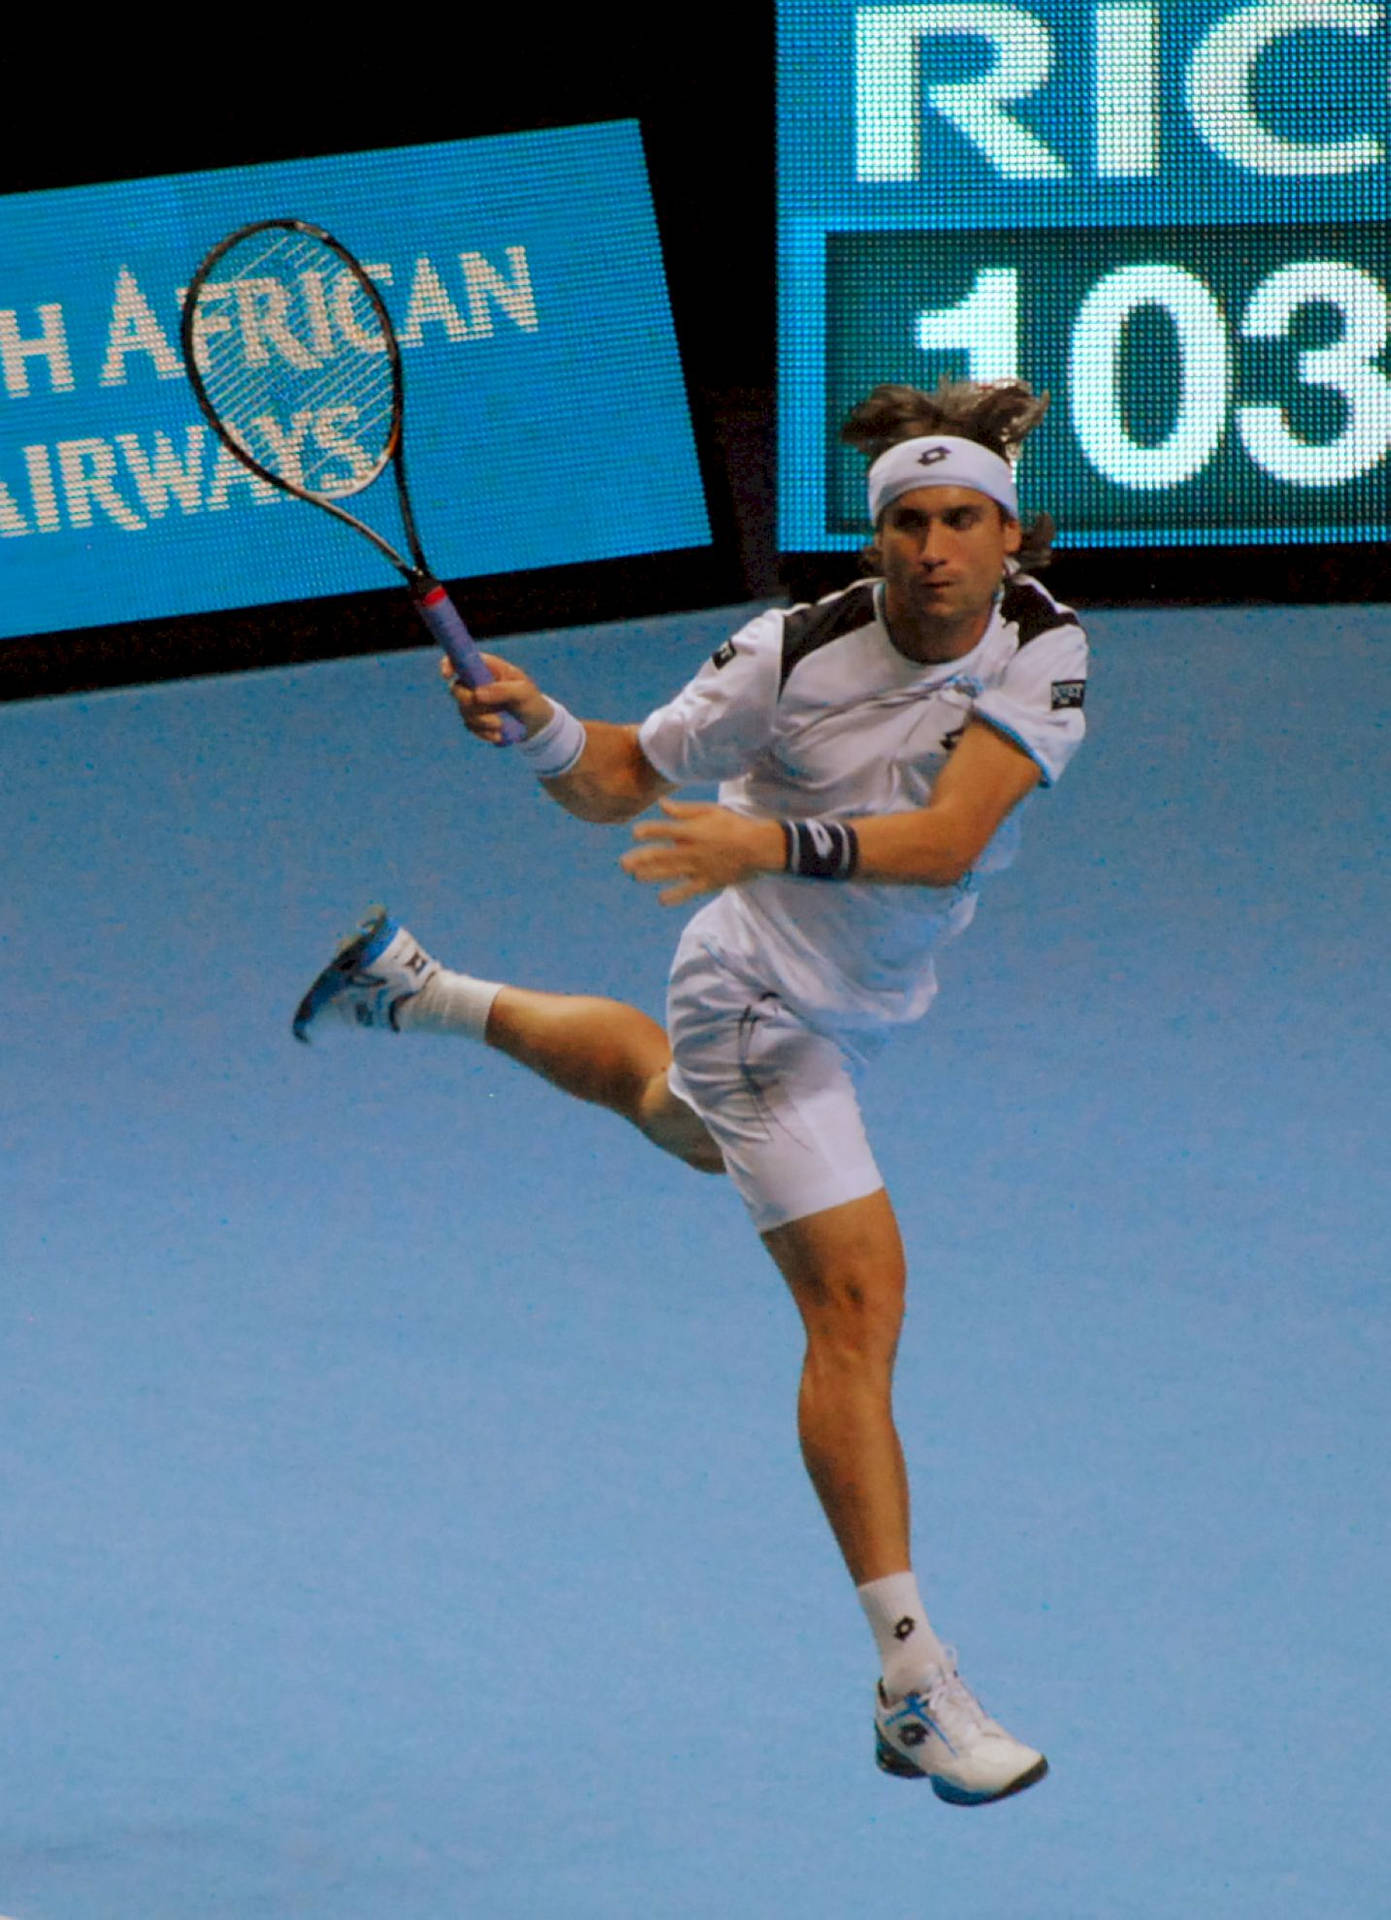 David Ferrer In Action On The Tennis Court. Wallpaper